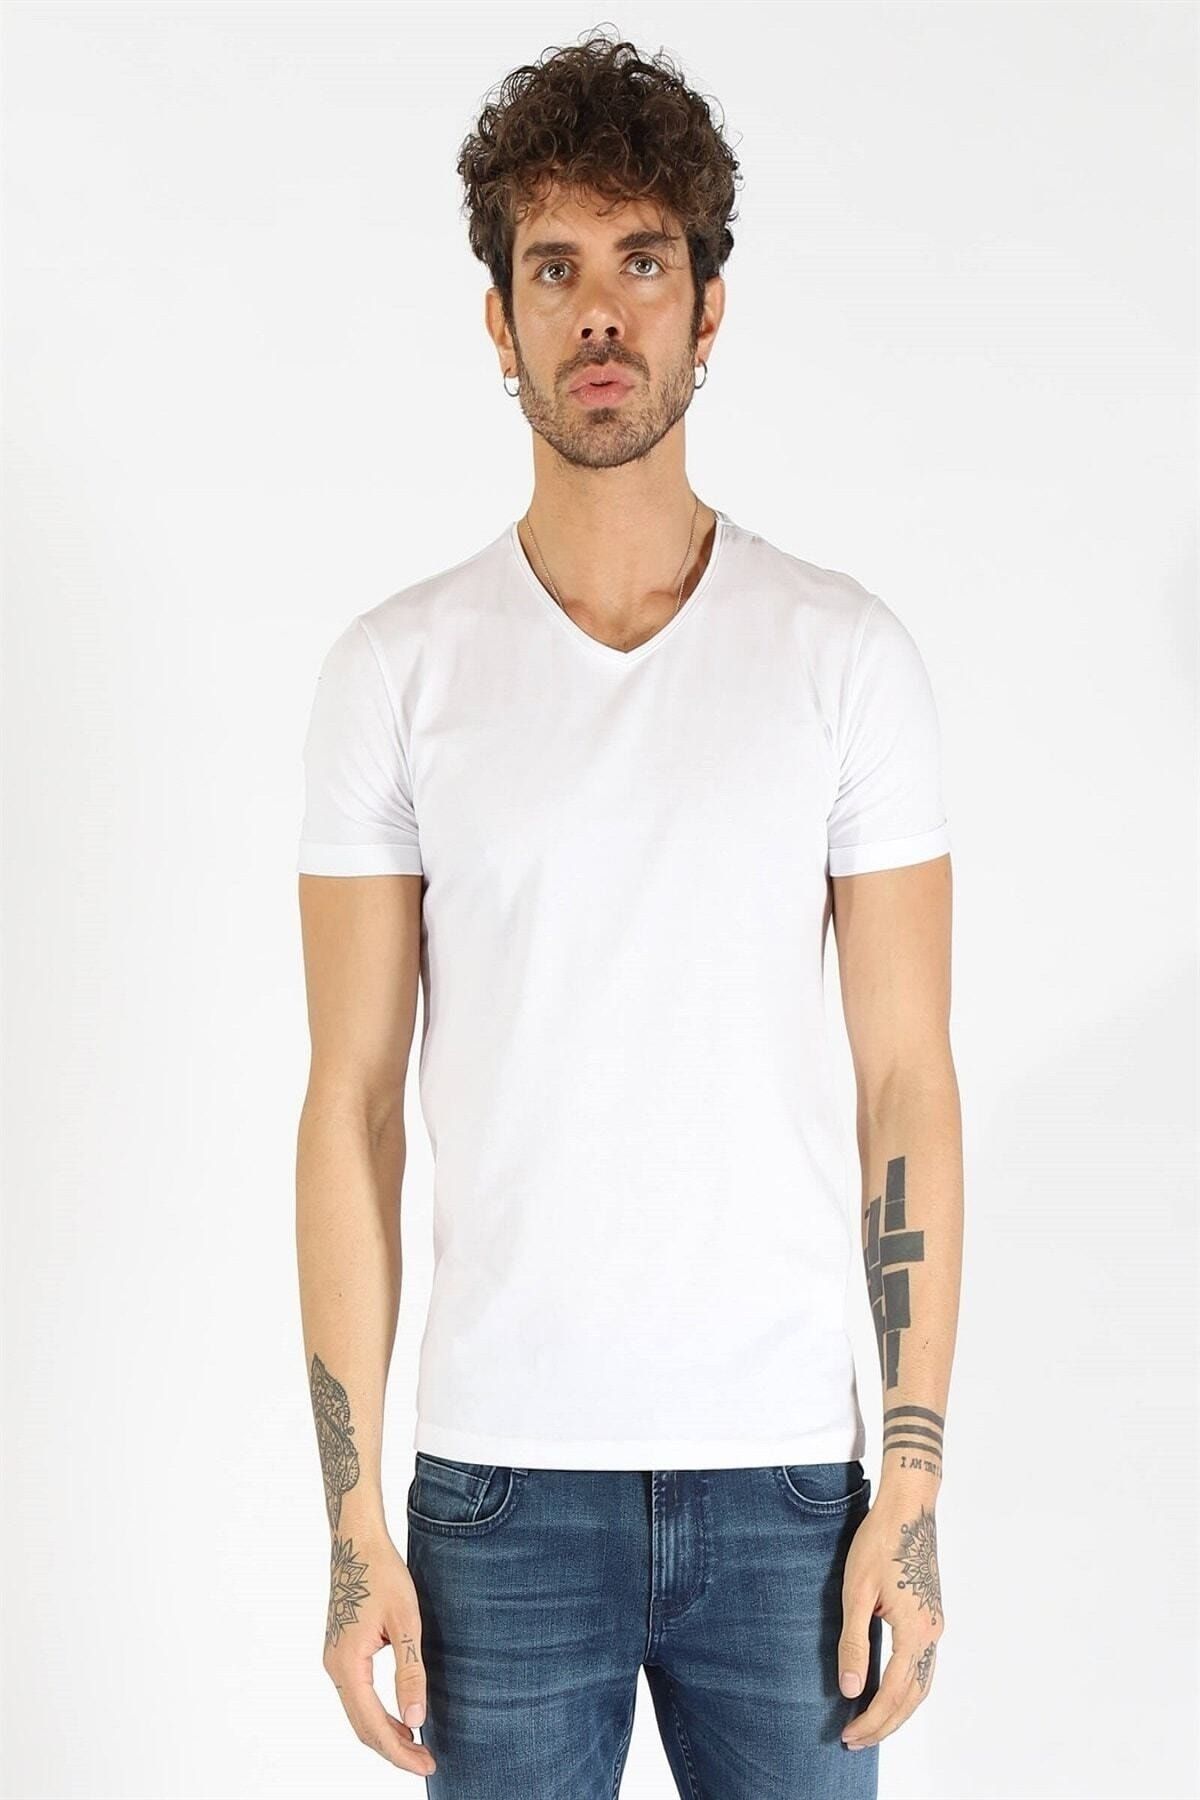 Twister Jeans Erkek Bisiklet Yaka Battal T-shirt 1827 Beyaz